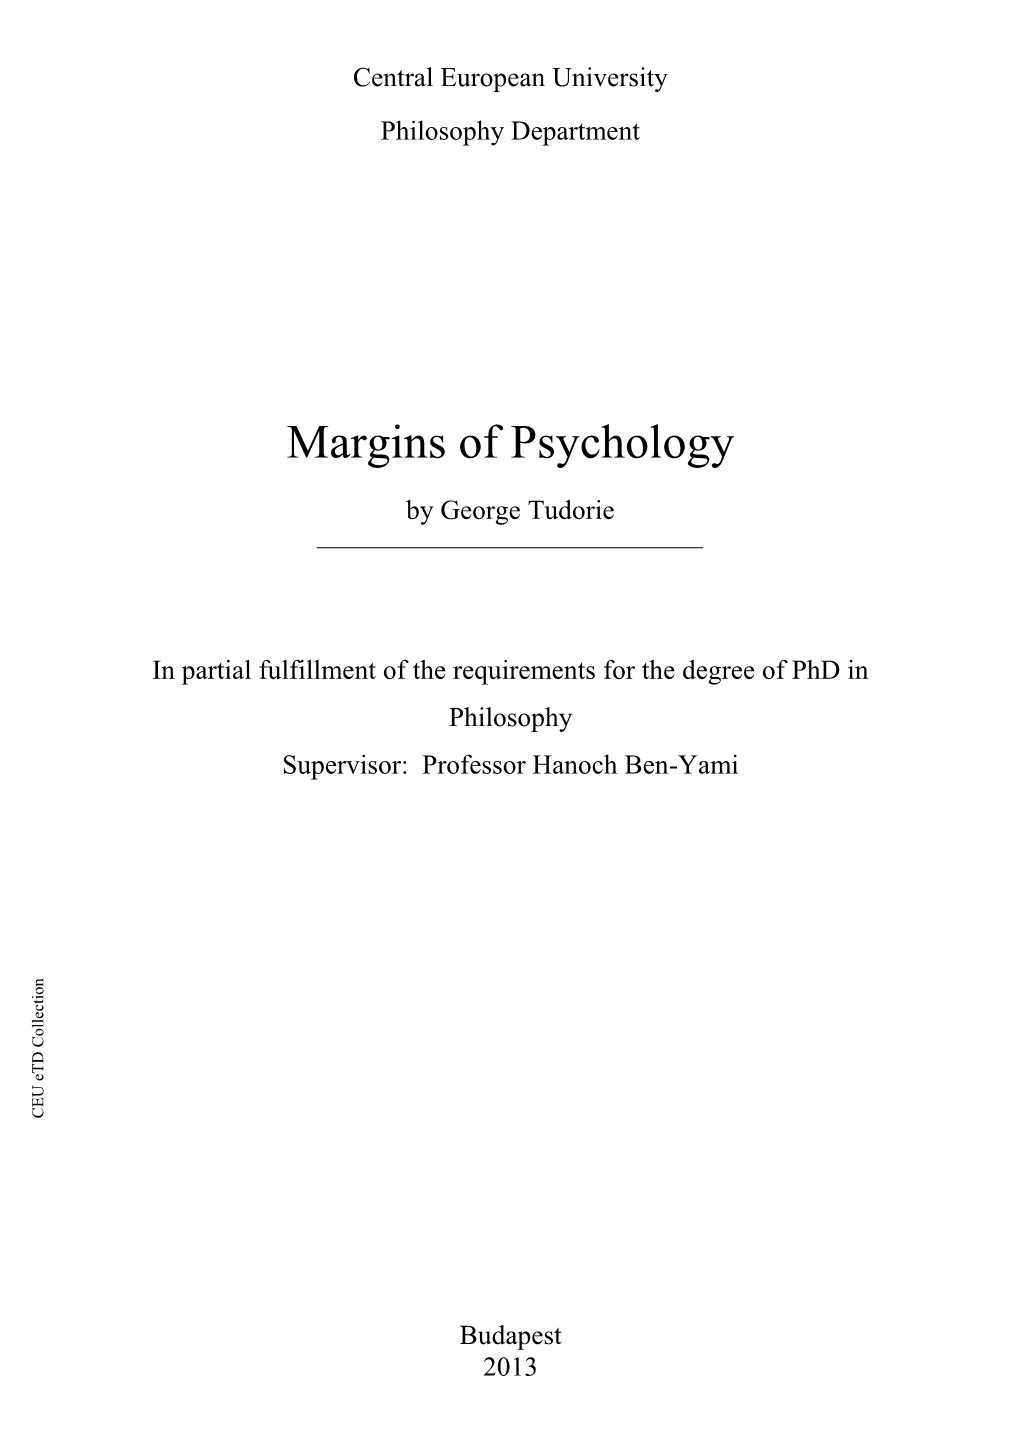 Margins of Psychology of Margins Central European University European Central